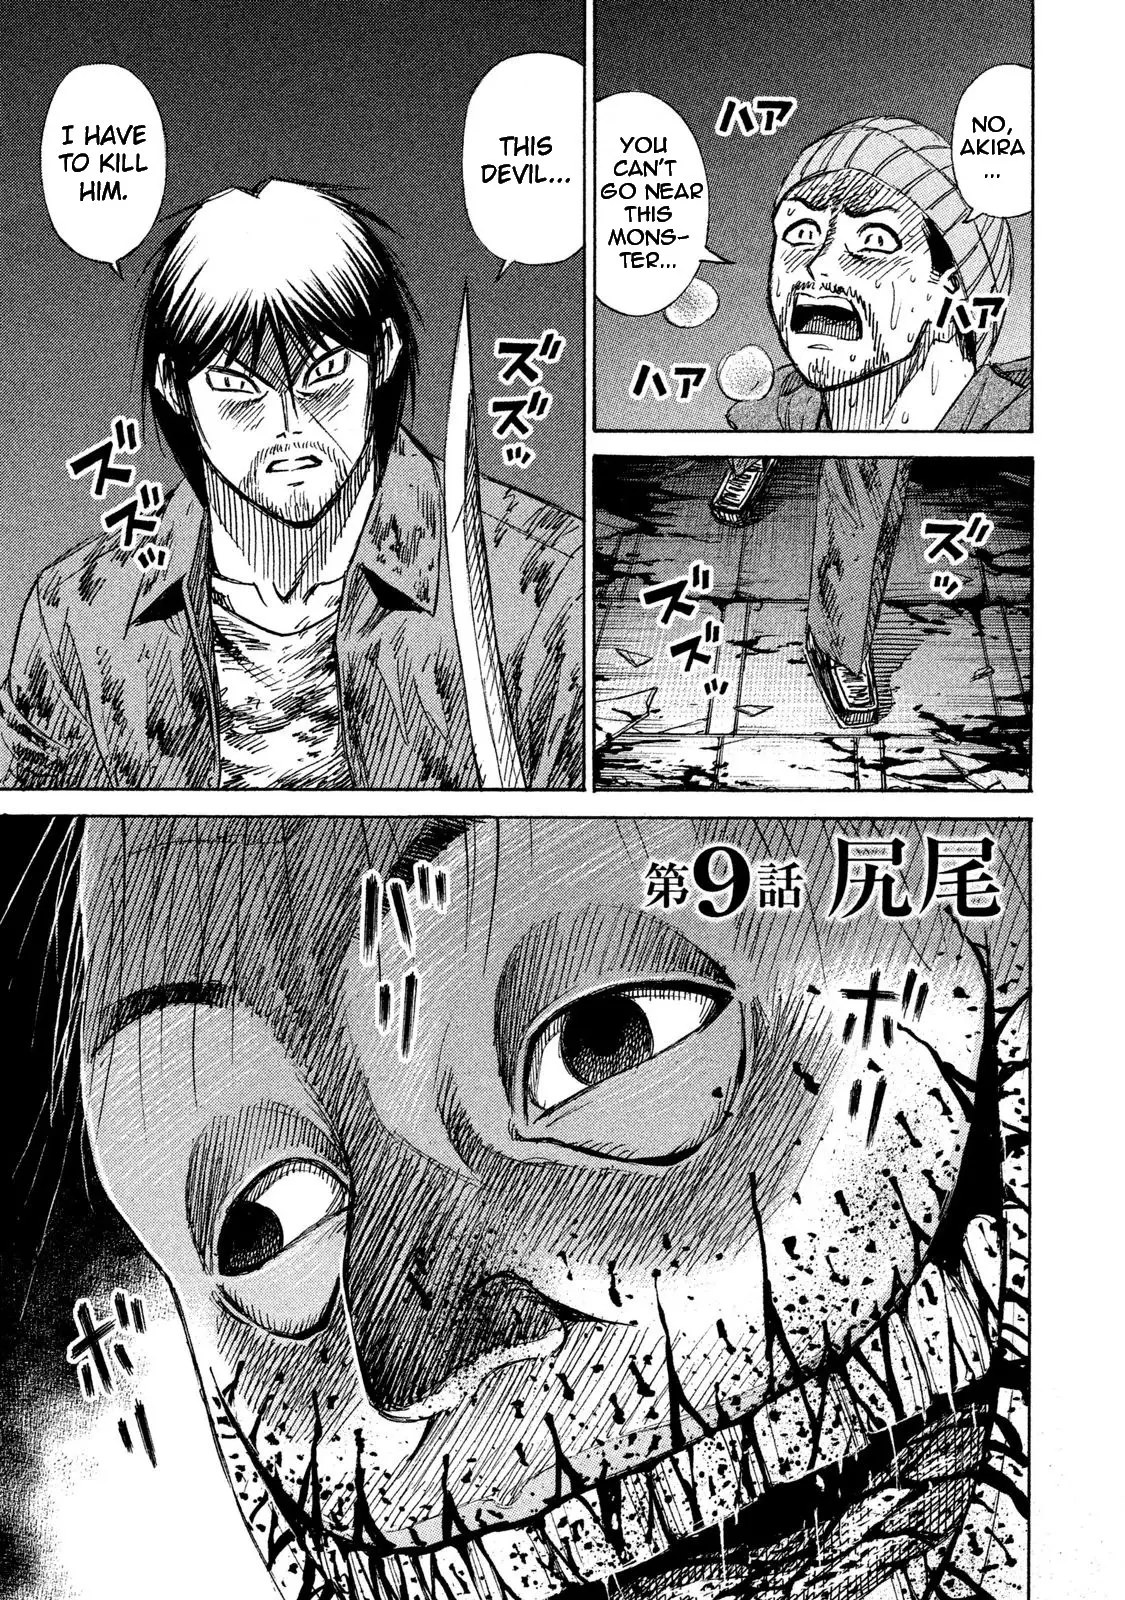 Higanjima - 48 Days Later - 9 page 5-7fe2c9b6